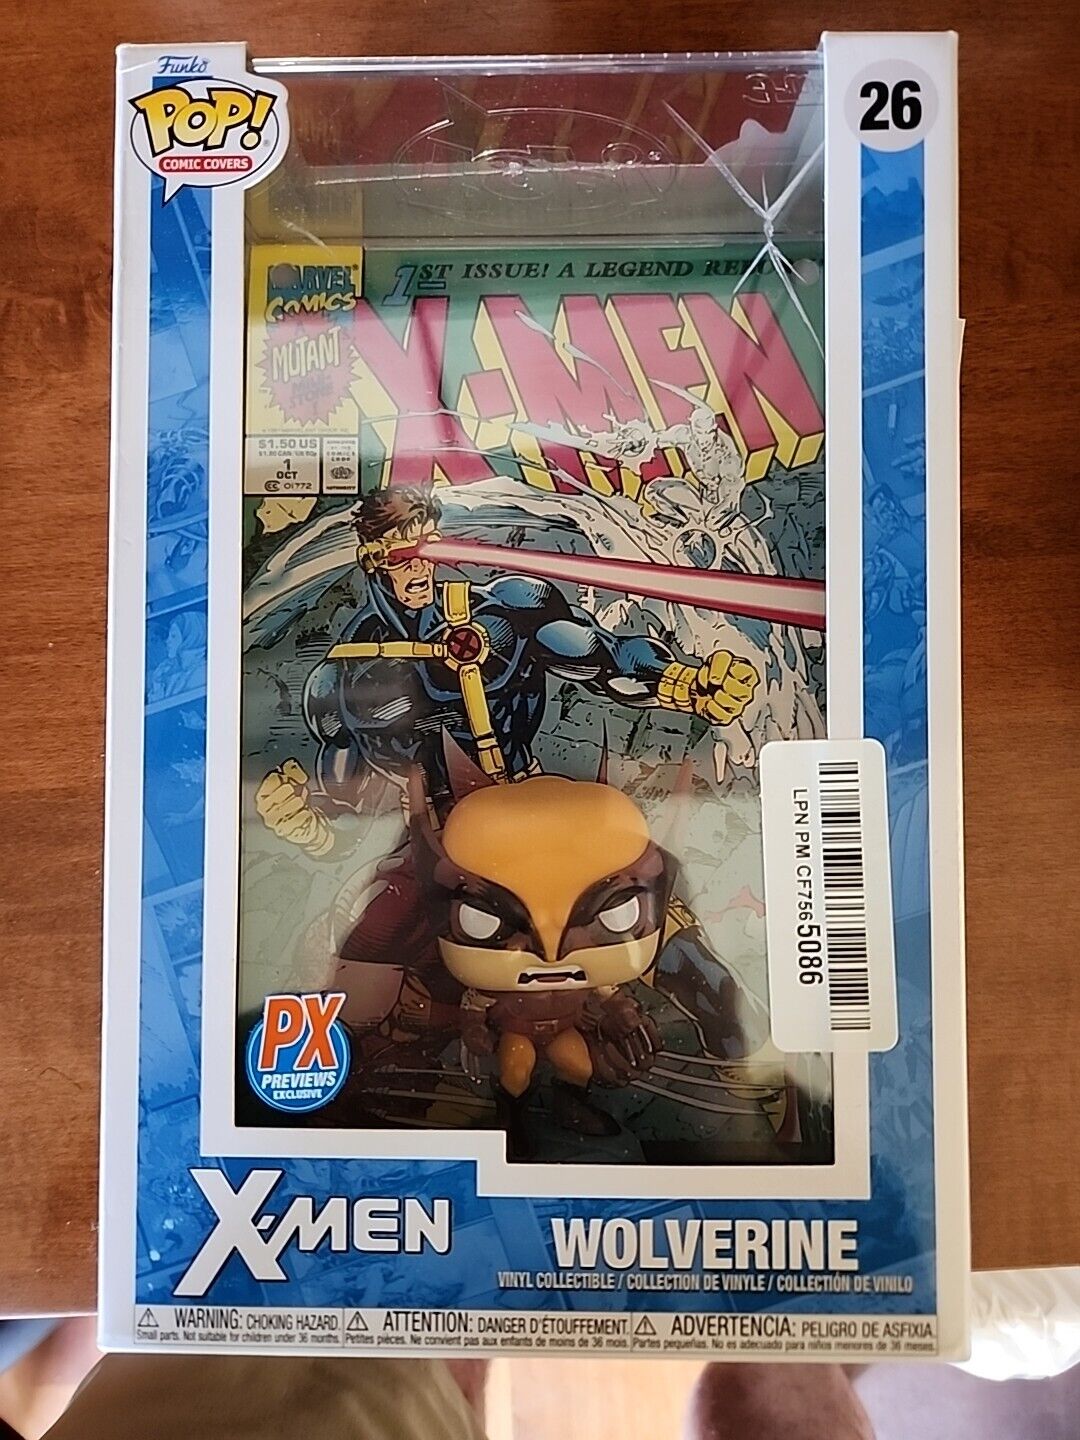 Funko Pop New X-Men #1 (1991) Wolverine Pop Comic Cover Figure #26 - PX